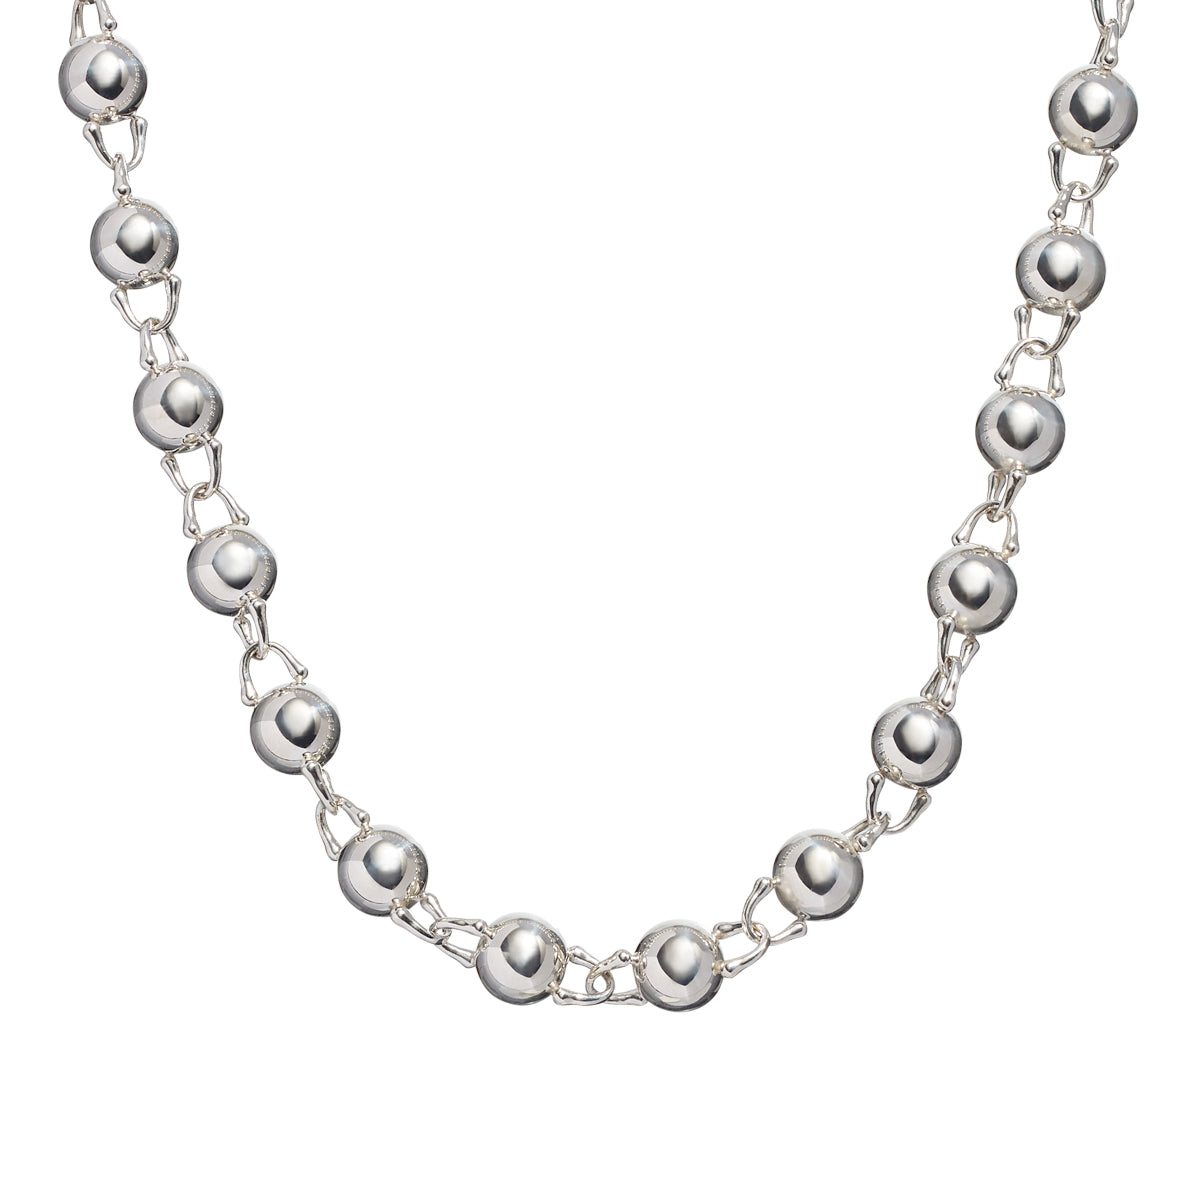 TreasureLock Bead Necklace 10mm in Sterling Silver